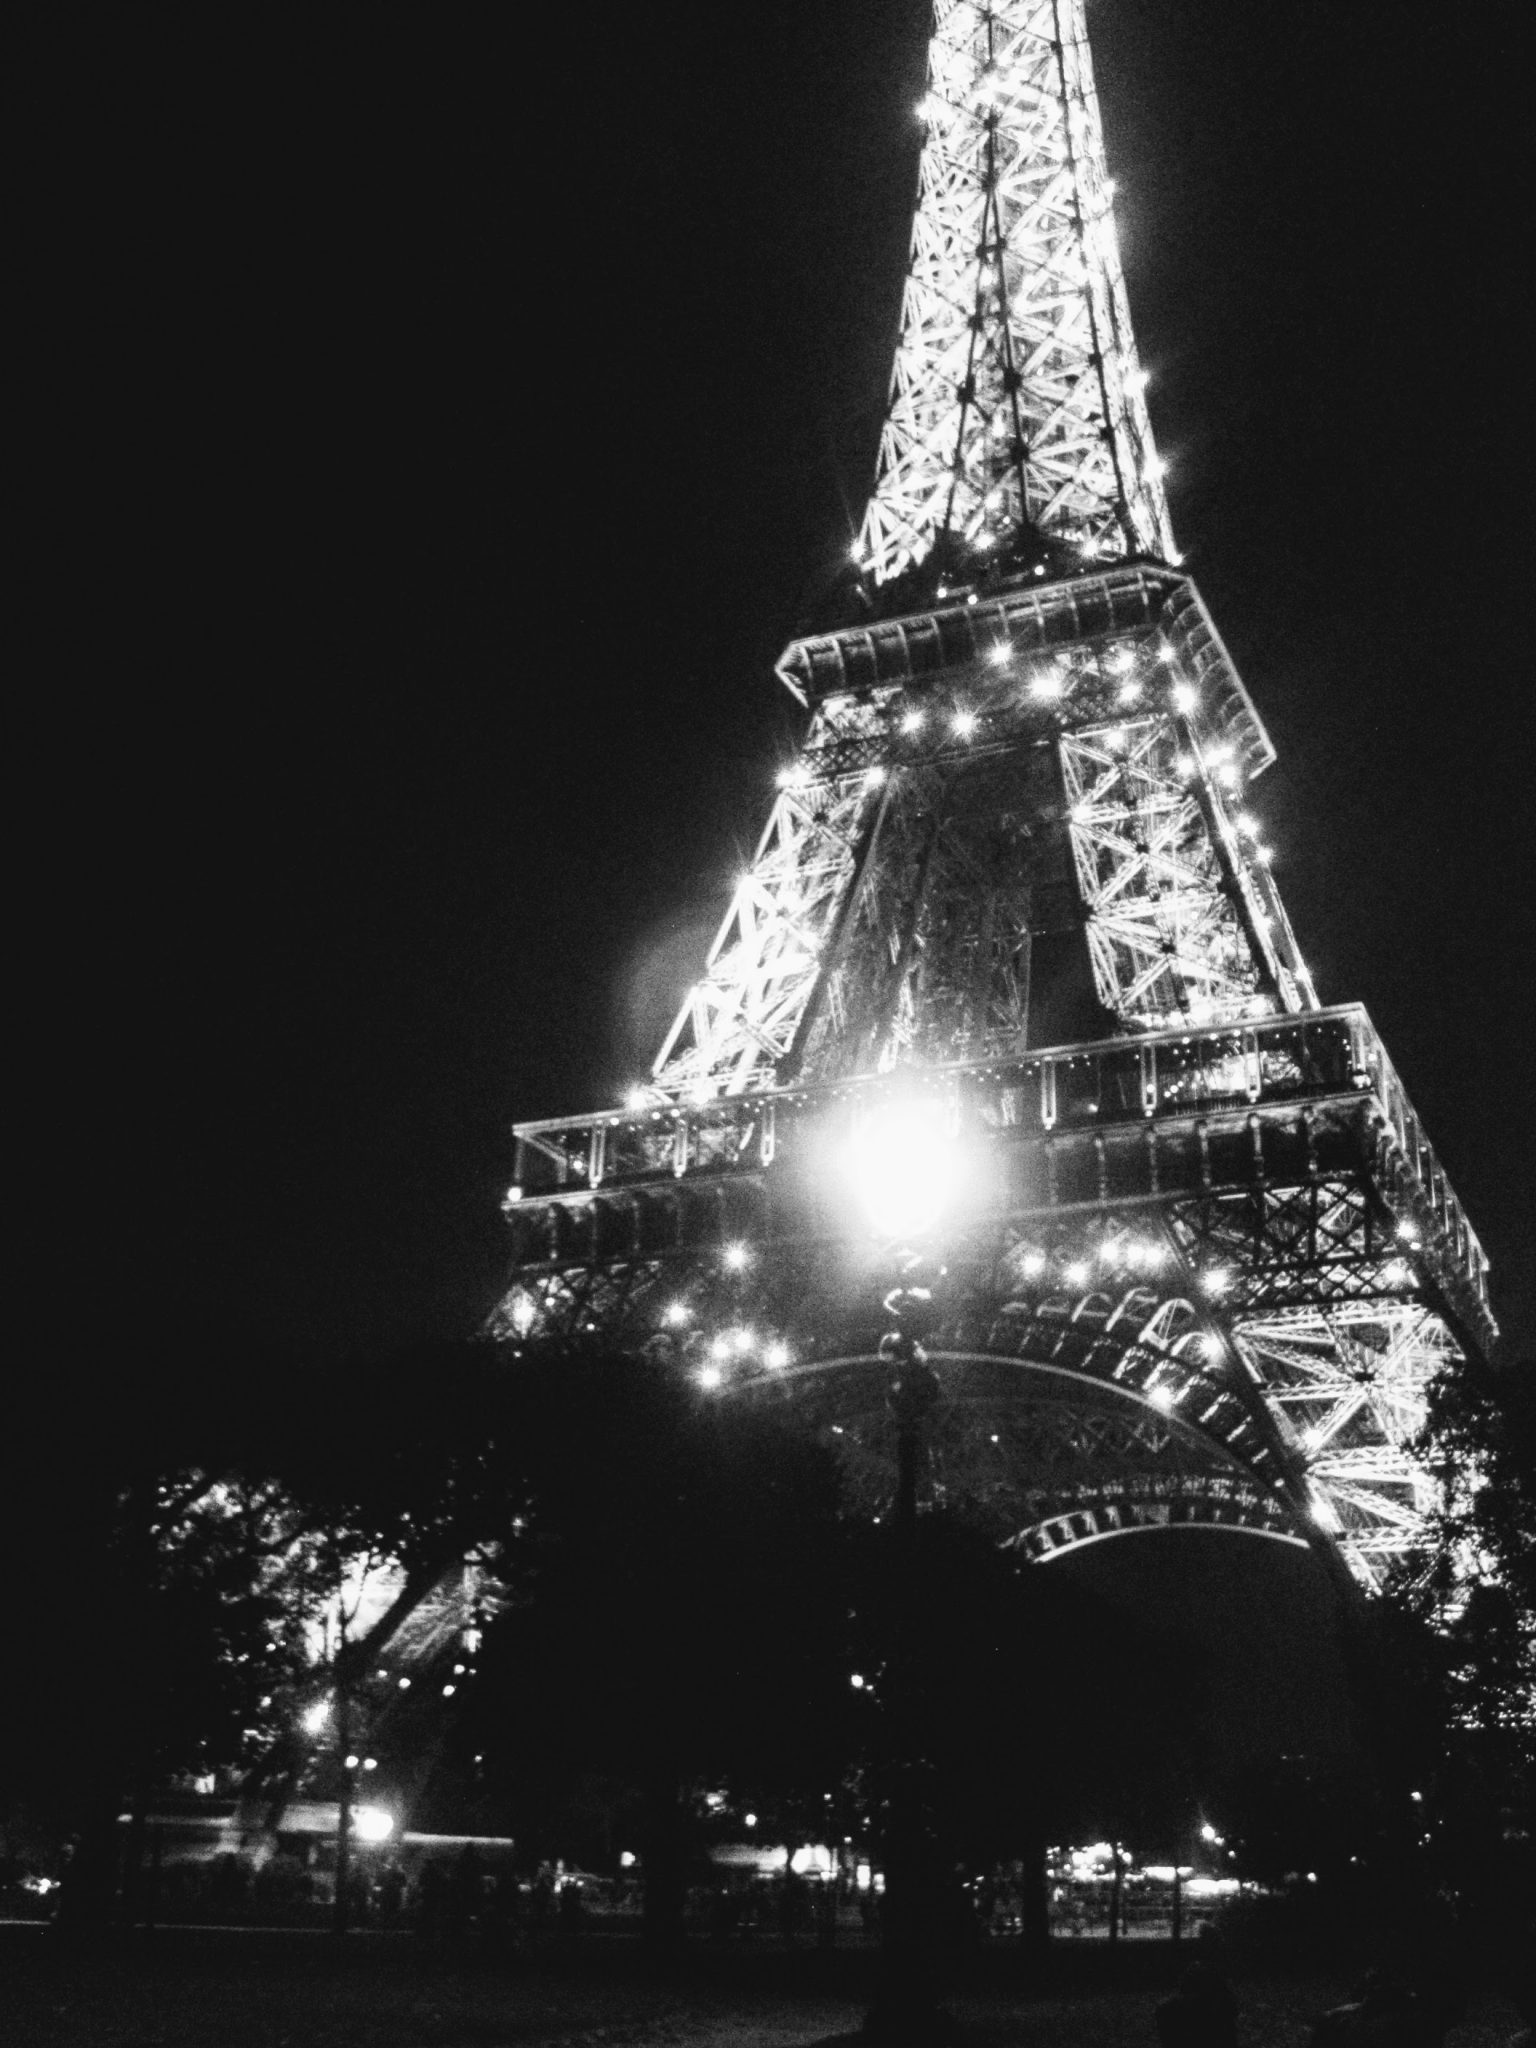 Eiffel Tower twinkling lights at night.